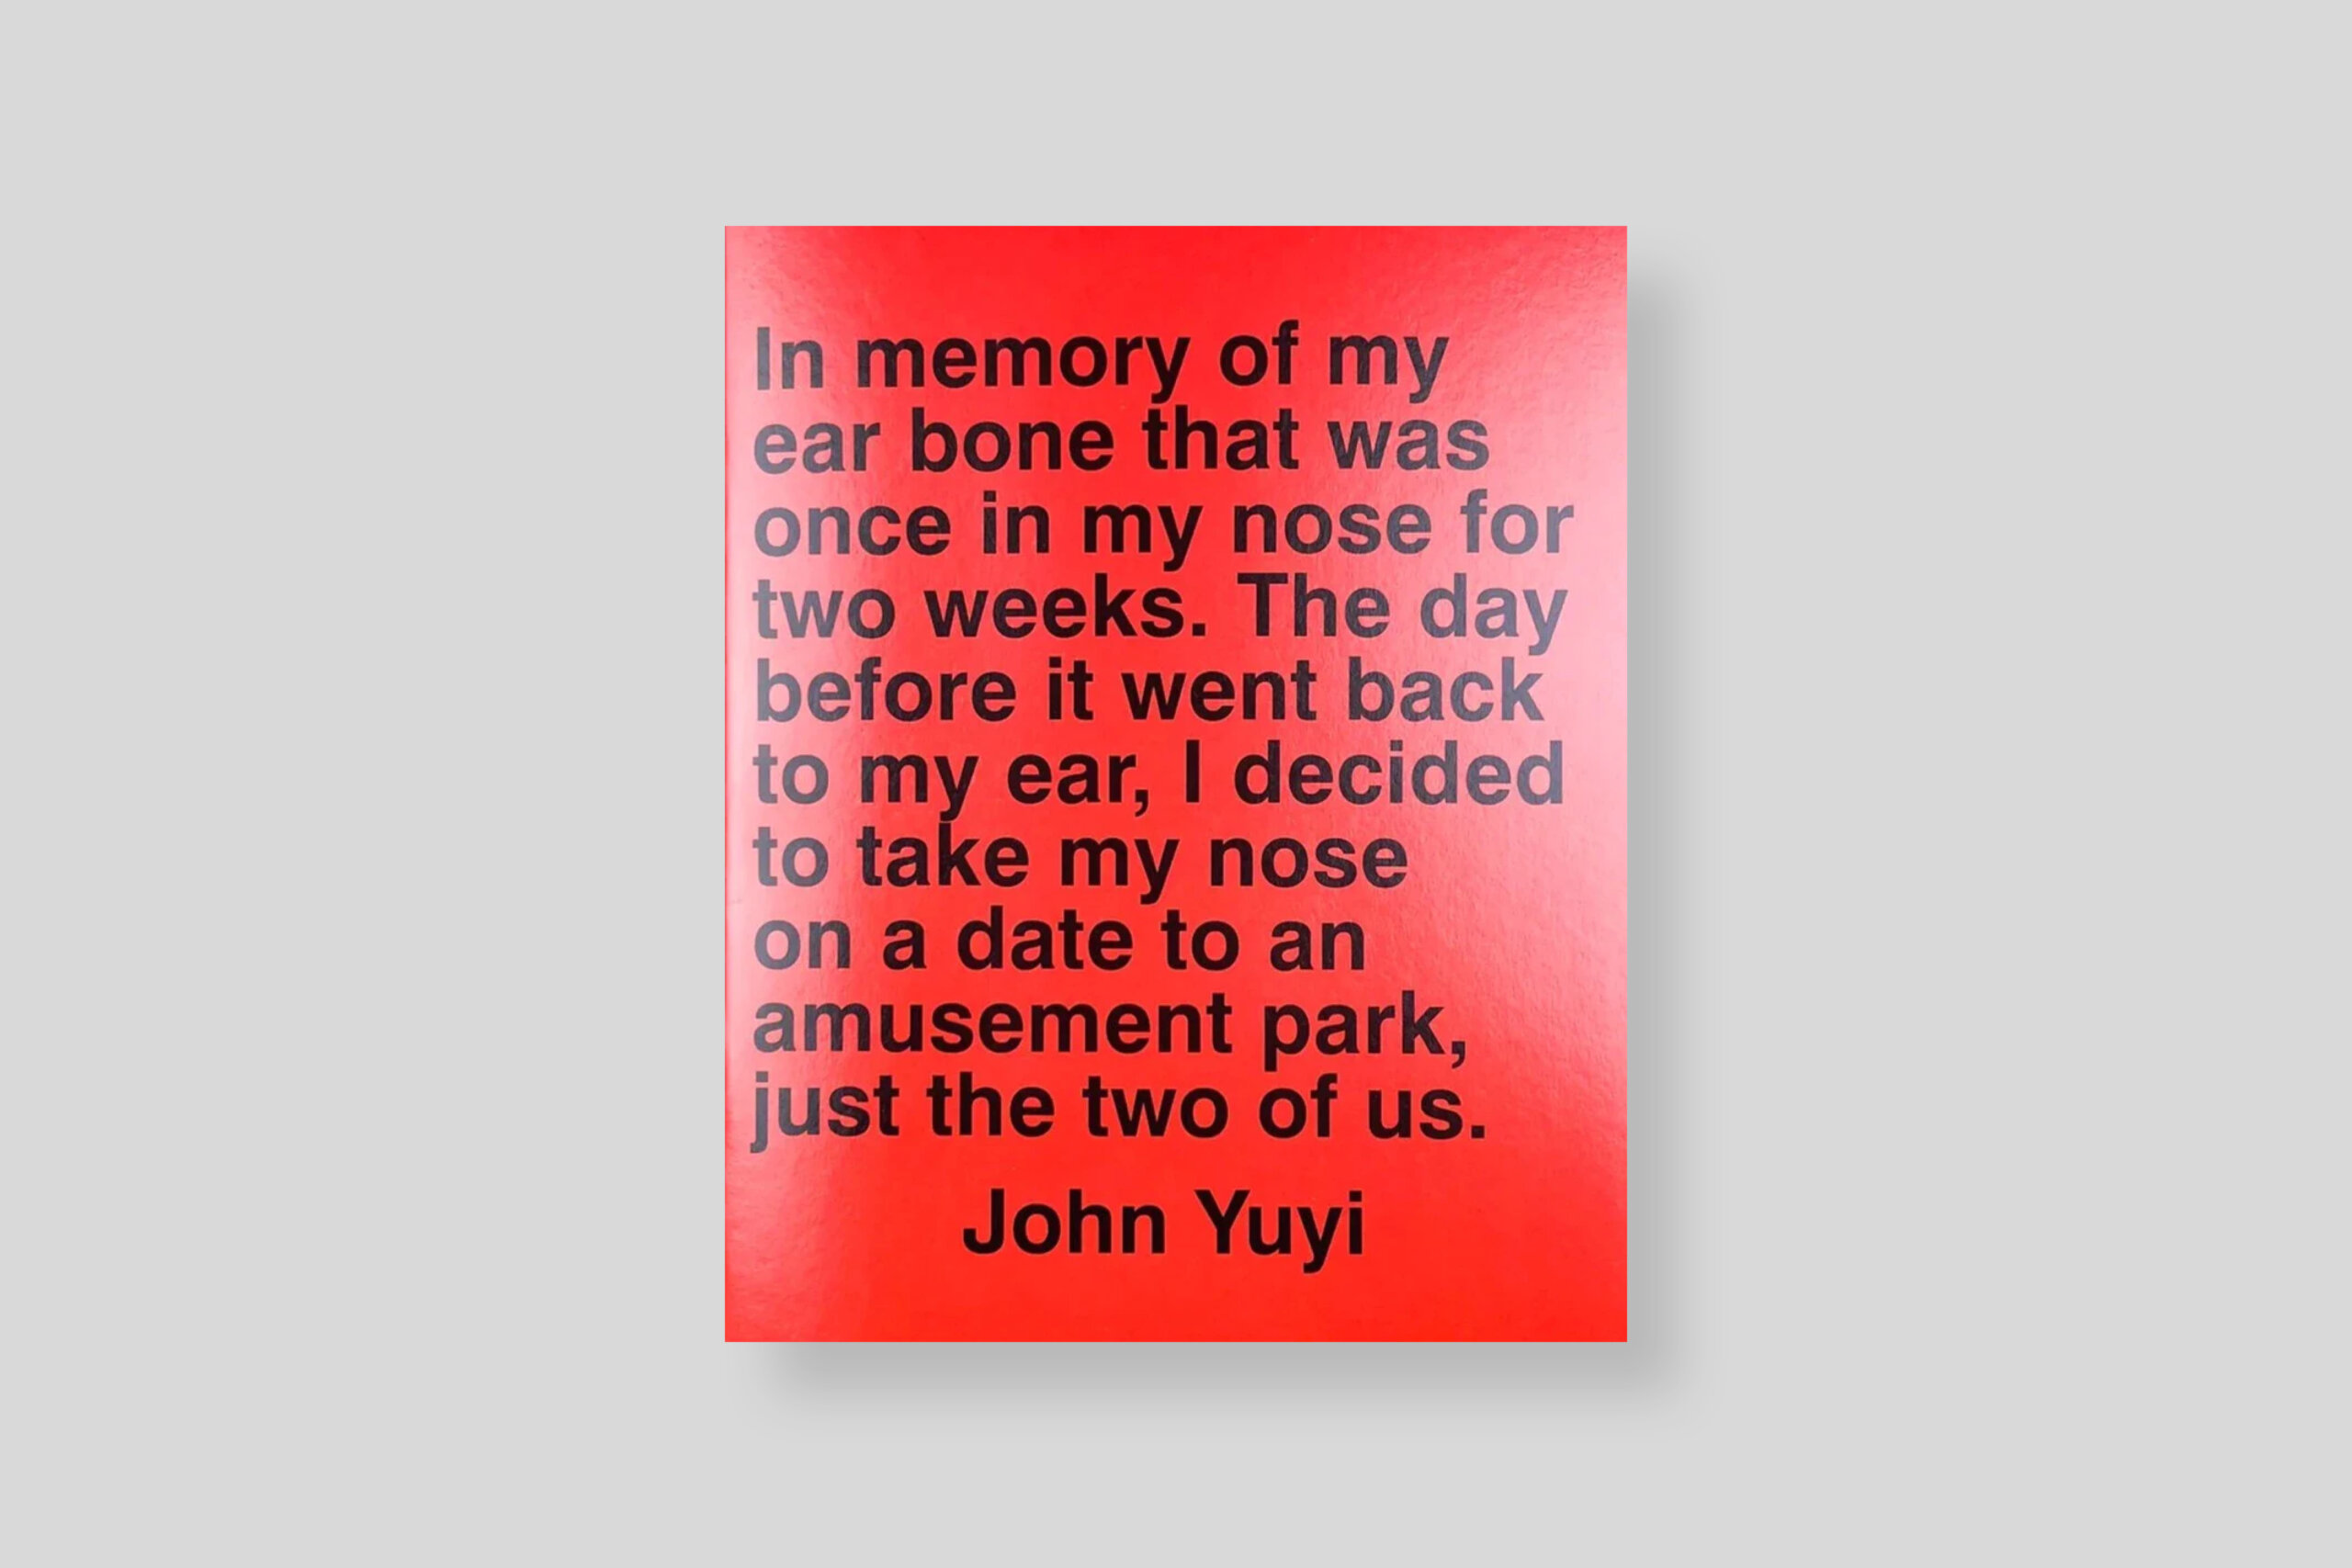 monogram-5-in-memory-of-juyi-art-paper-editions-cover